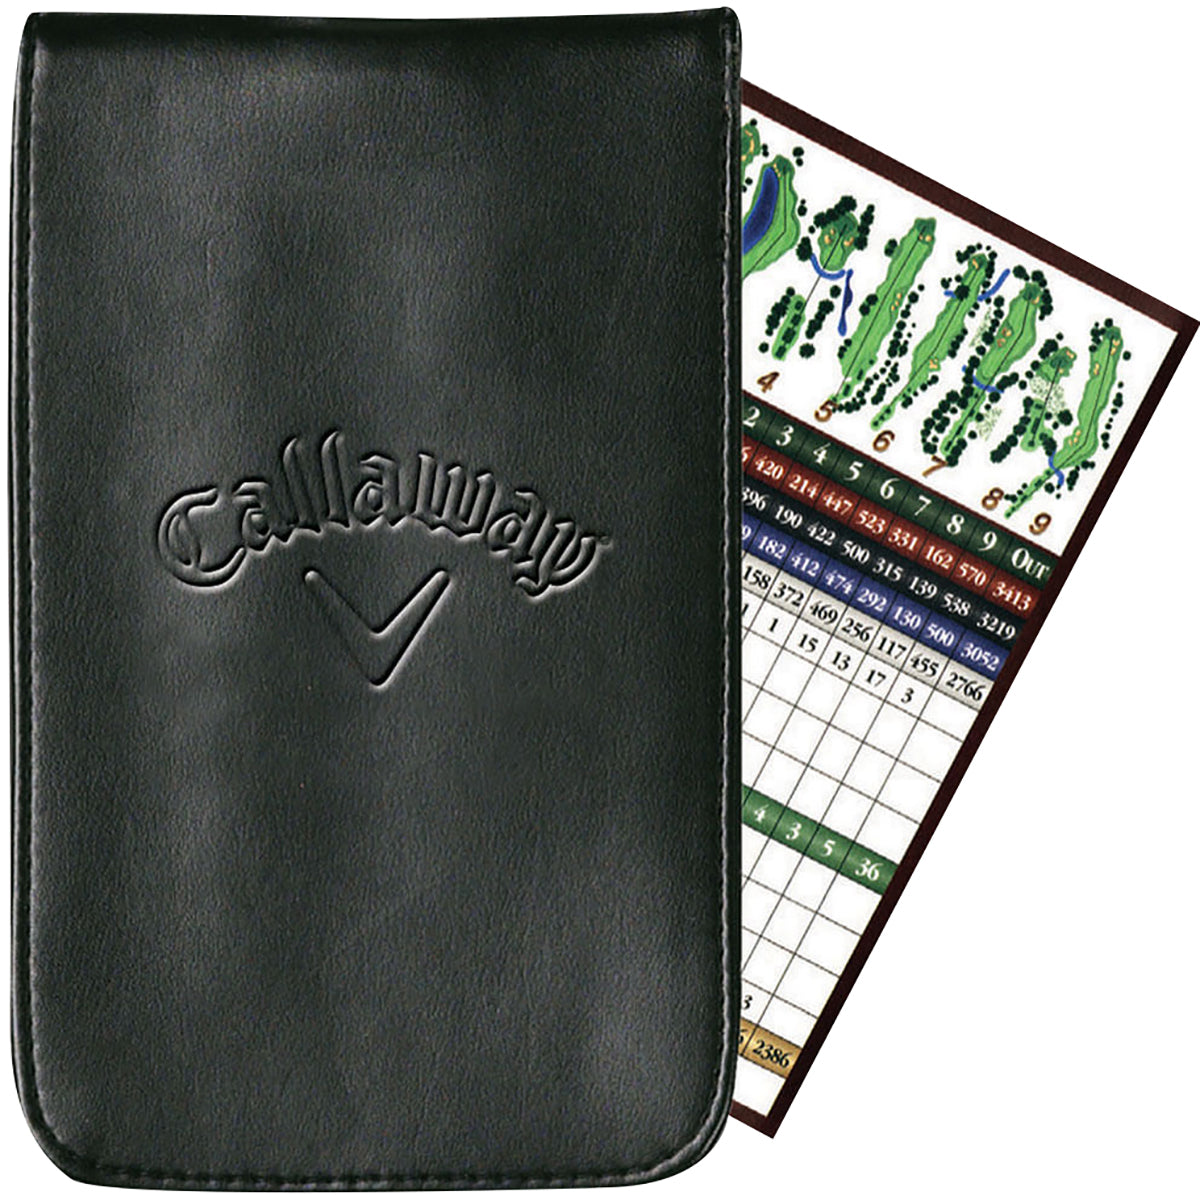 Callaway Golf Scorecard Holder Callaway